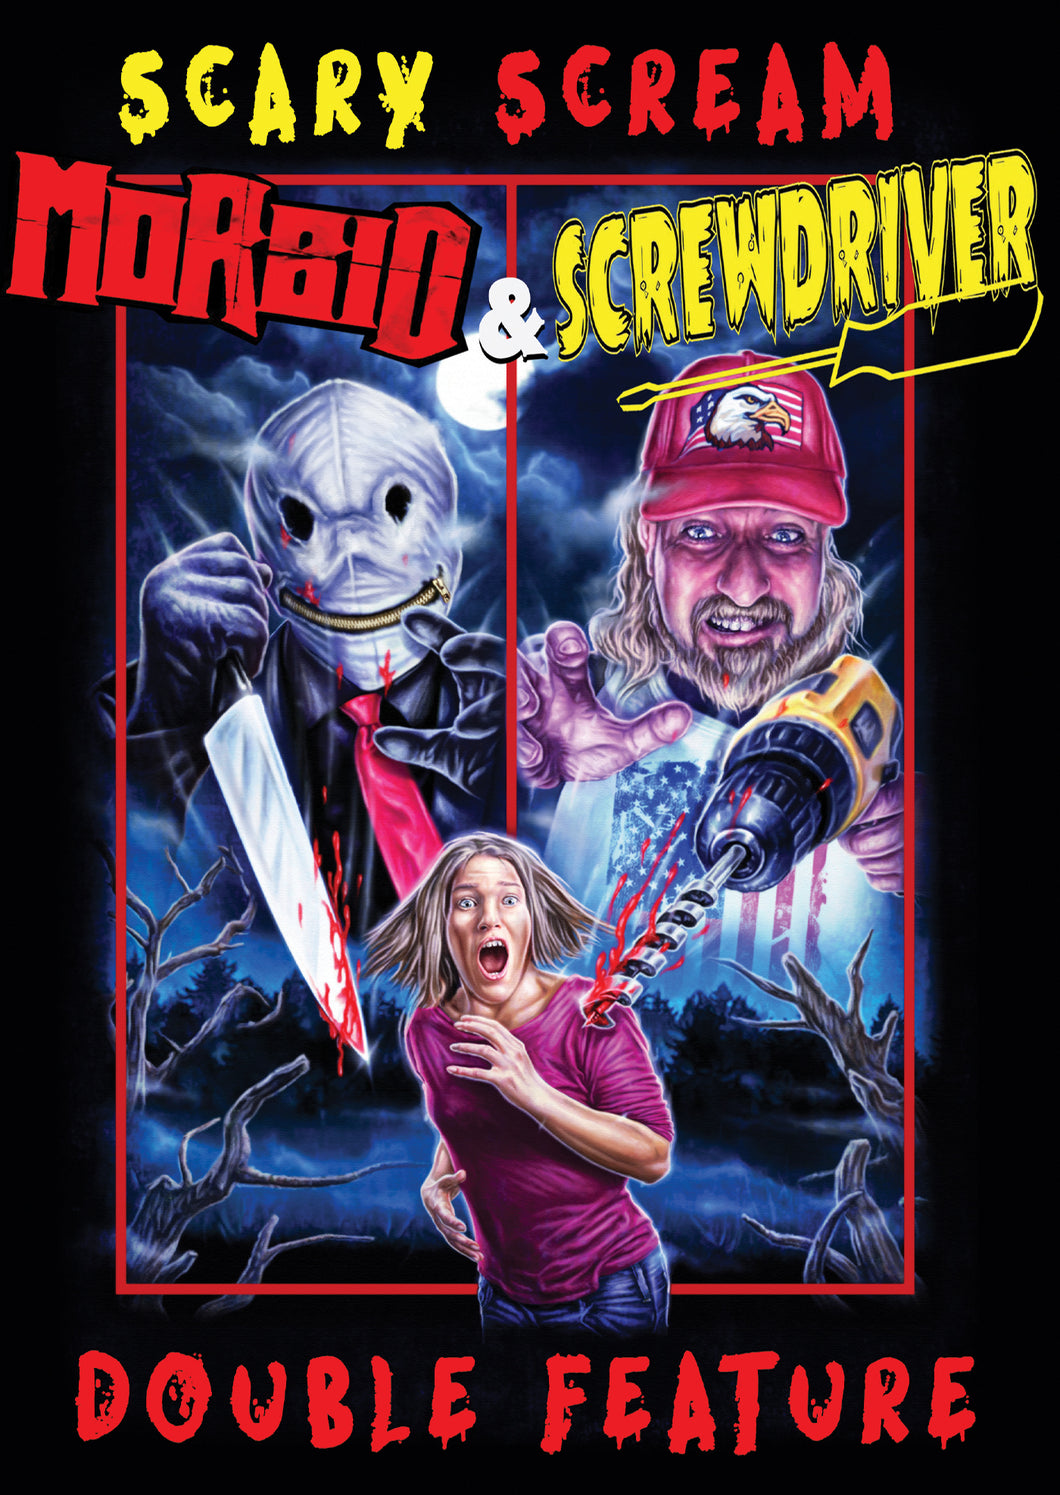 Morbid / Screwdriver Double Feature DVD